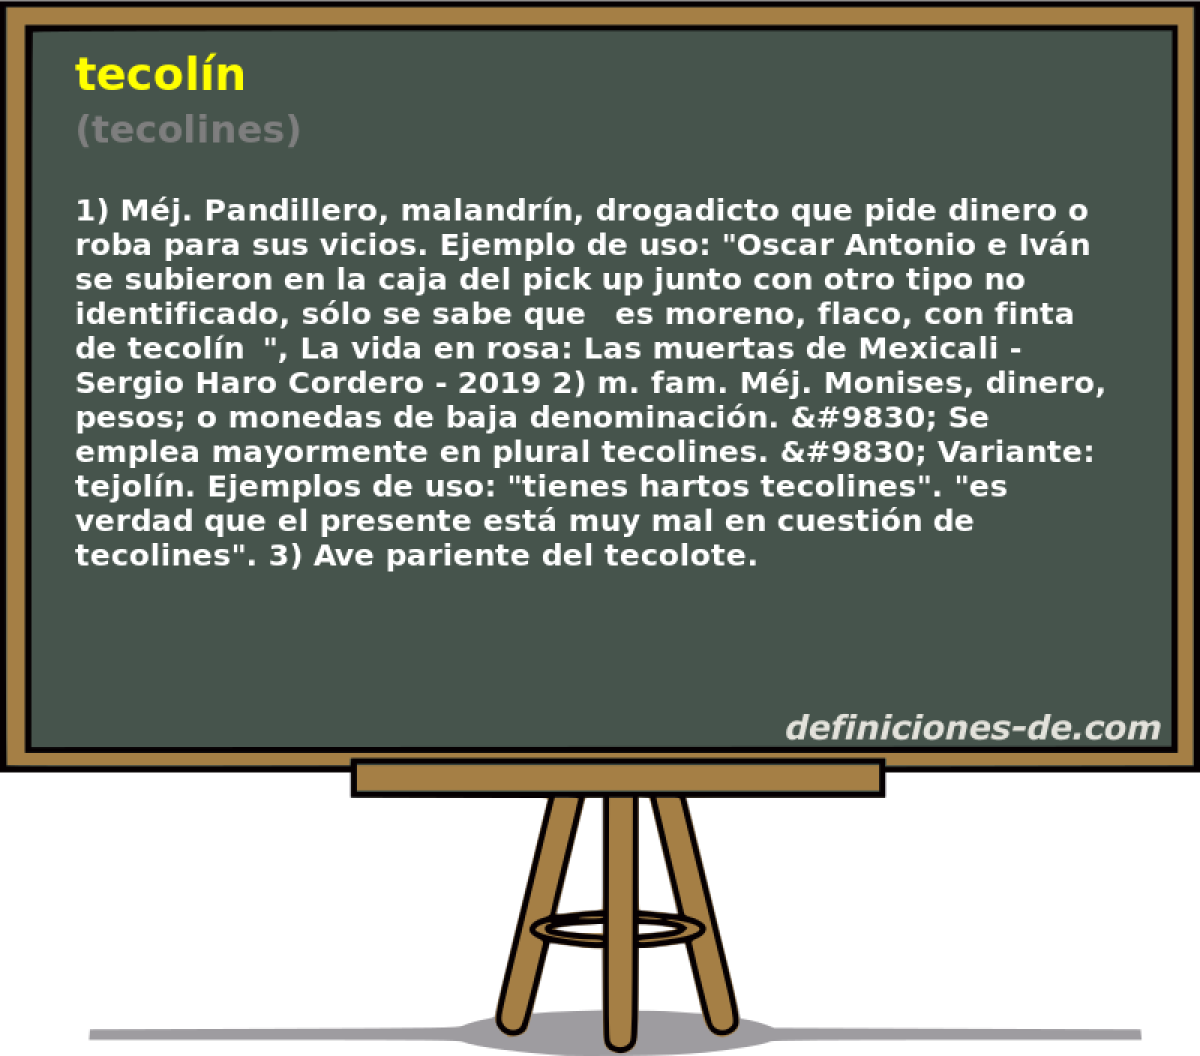 tecoln (tecolines)